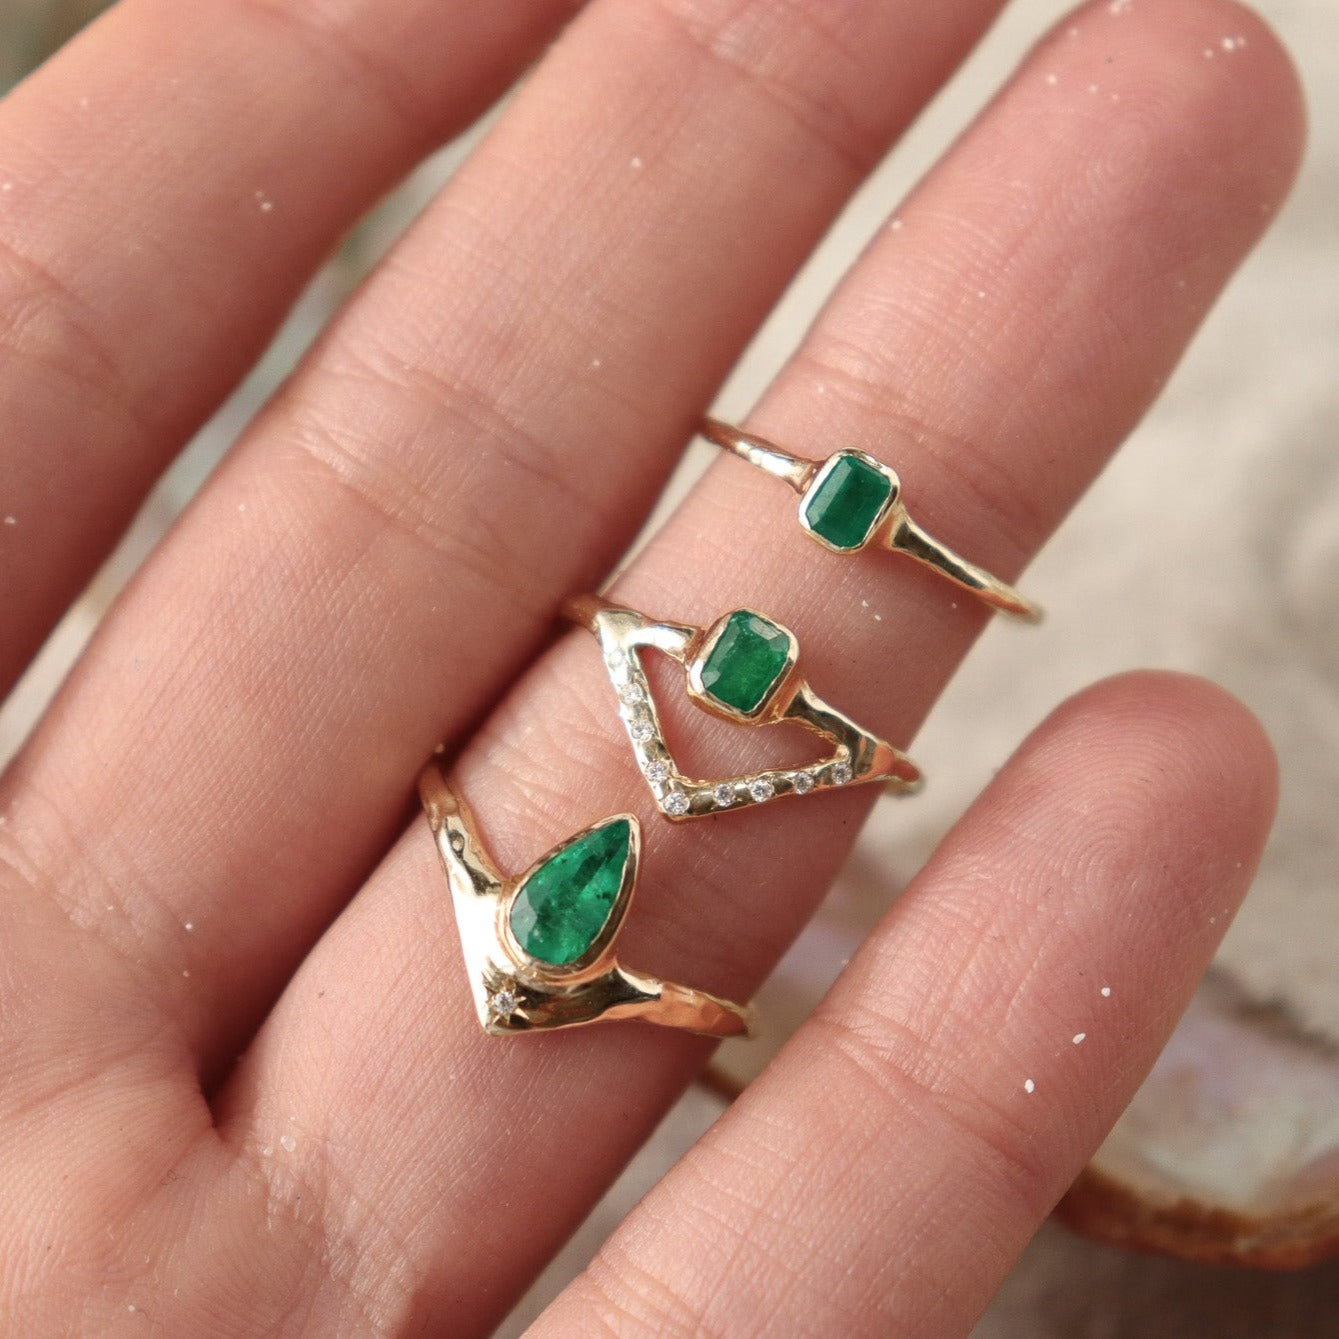 Three unique emerald rings shown together for comparison. 